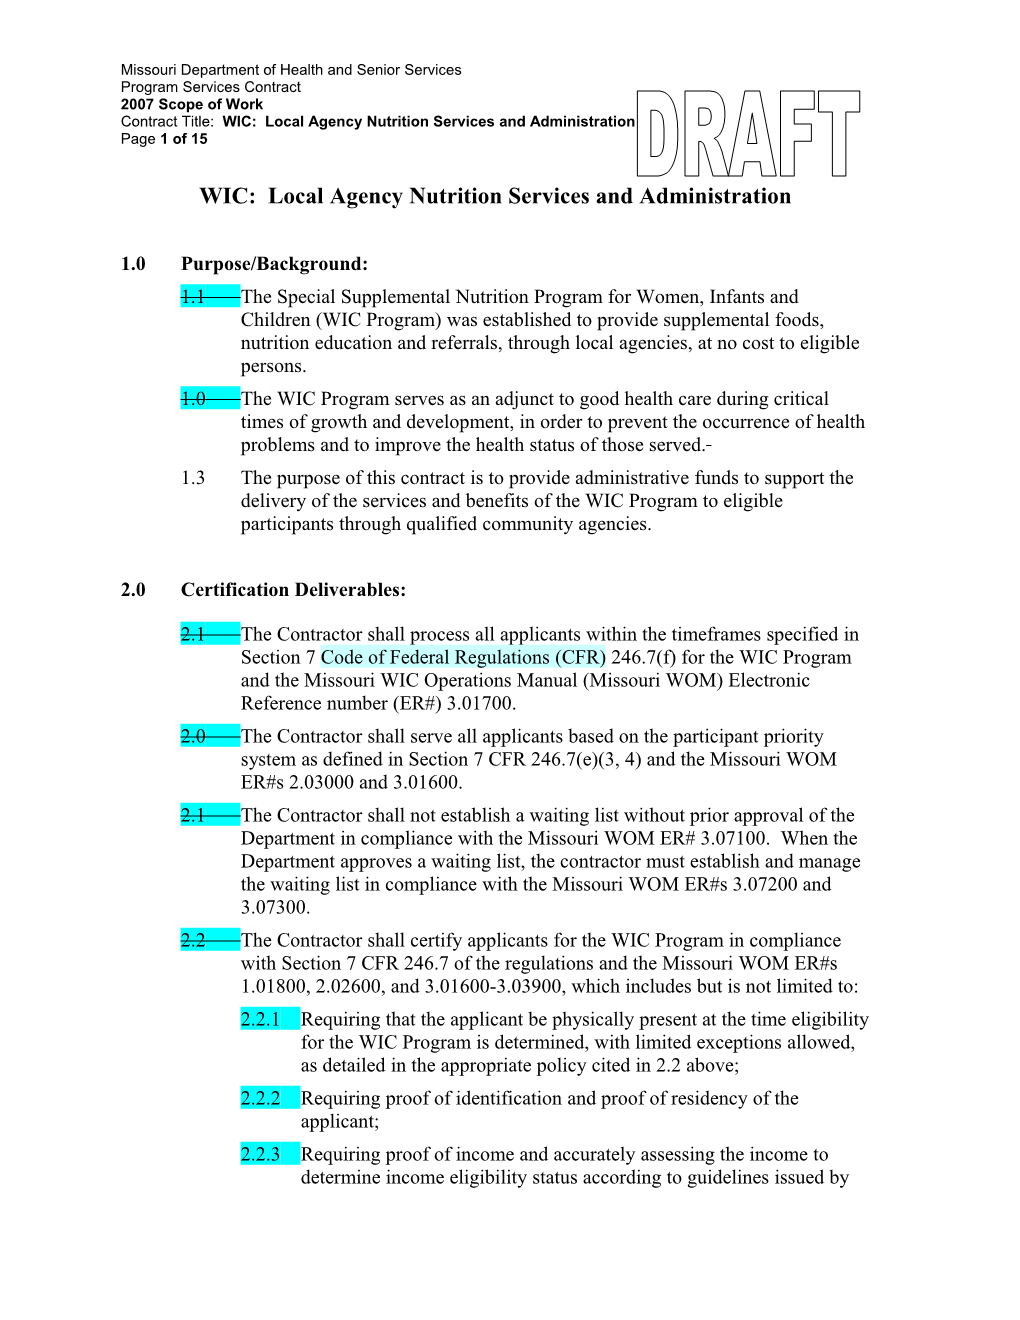 WIC Local Agency (LA) Contract